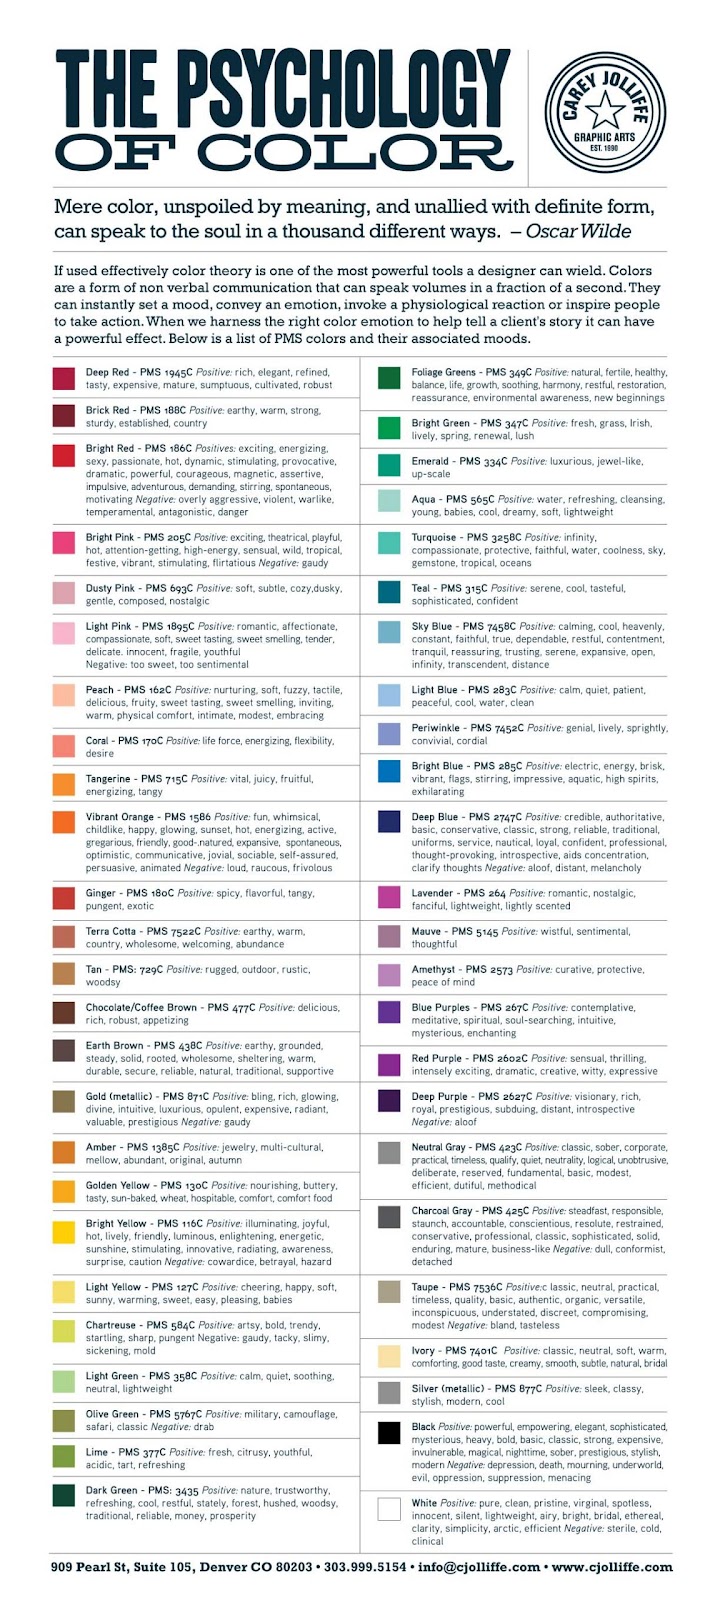 Color psychologi - GAMELAB.ID